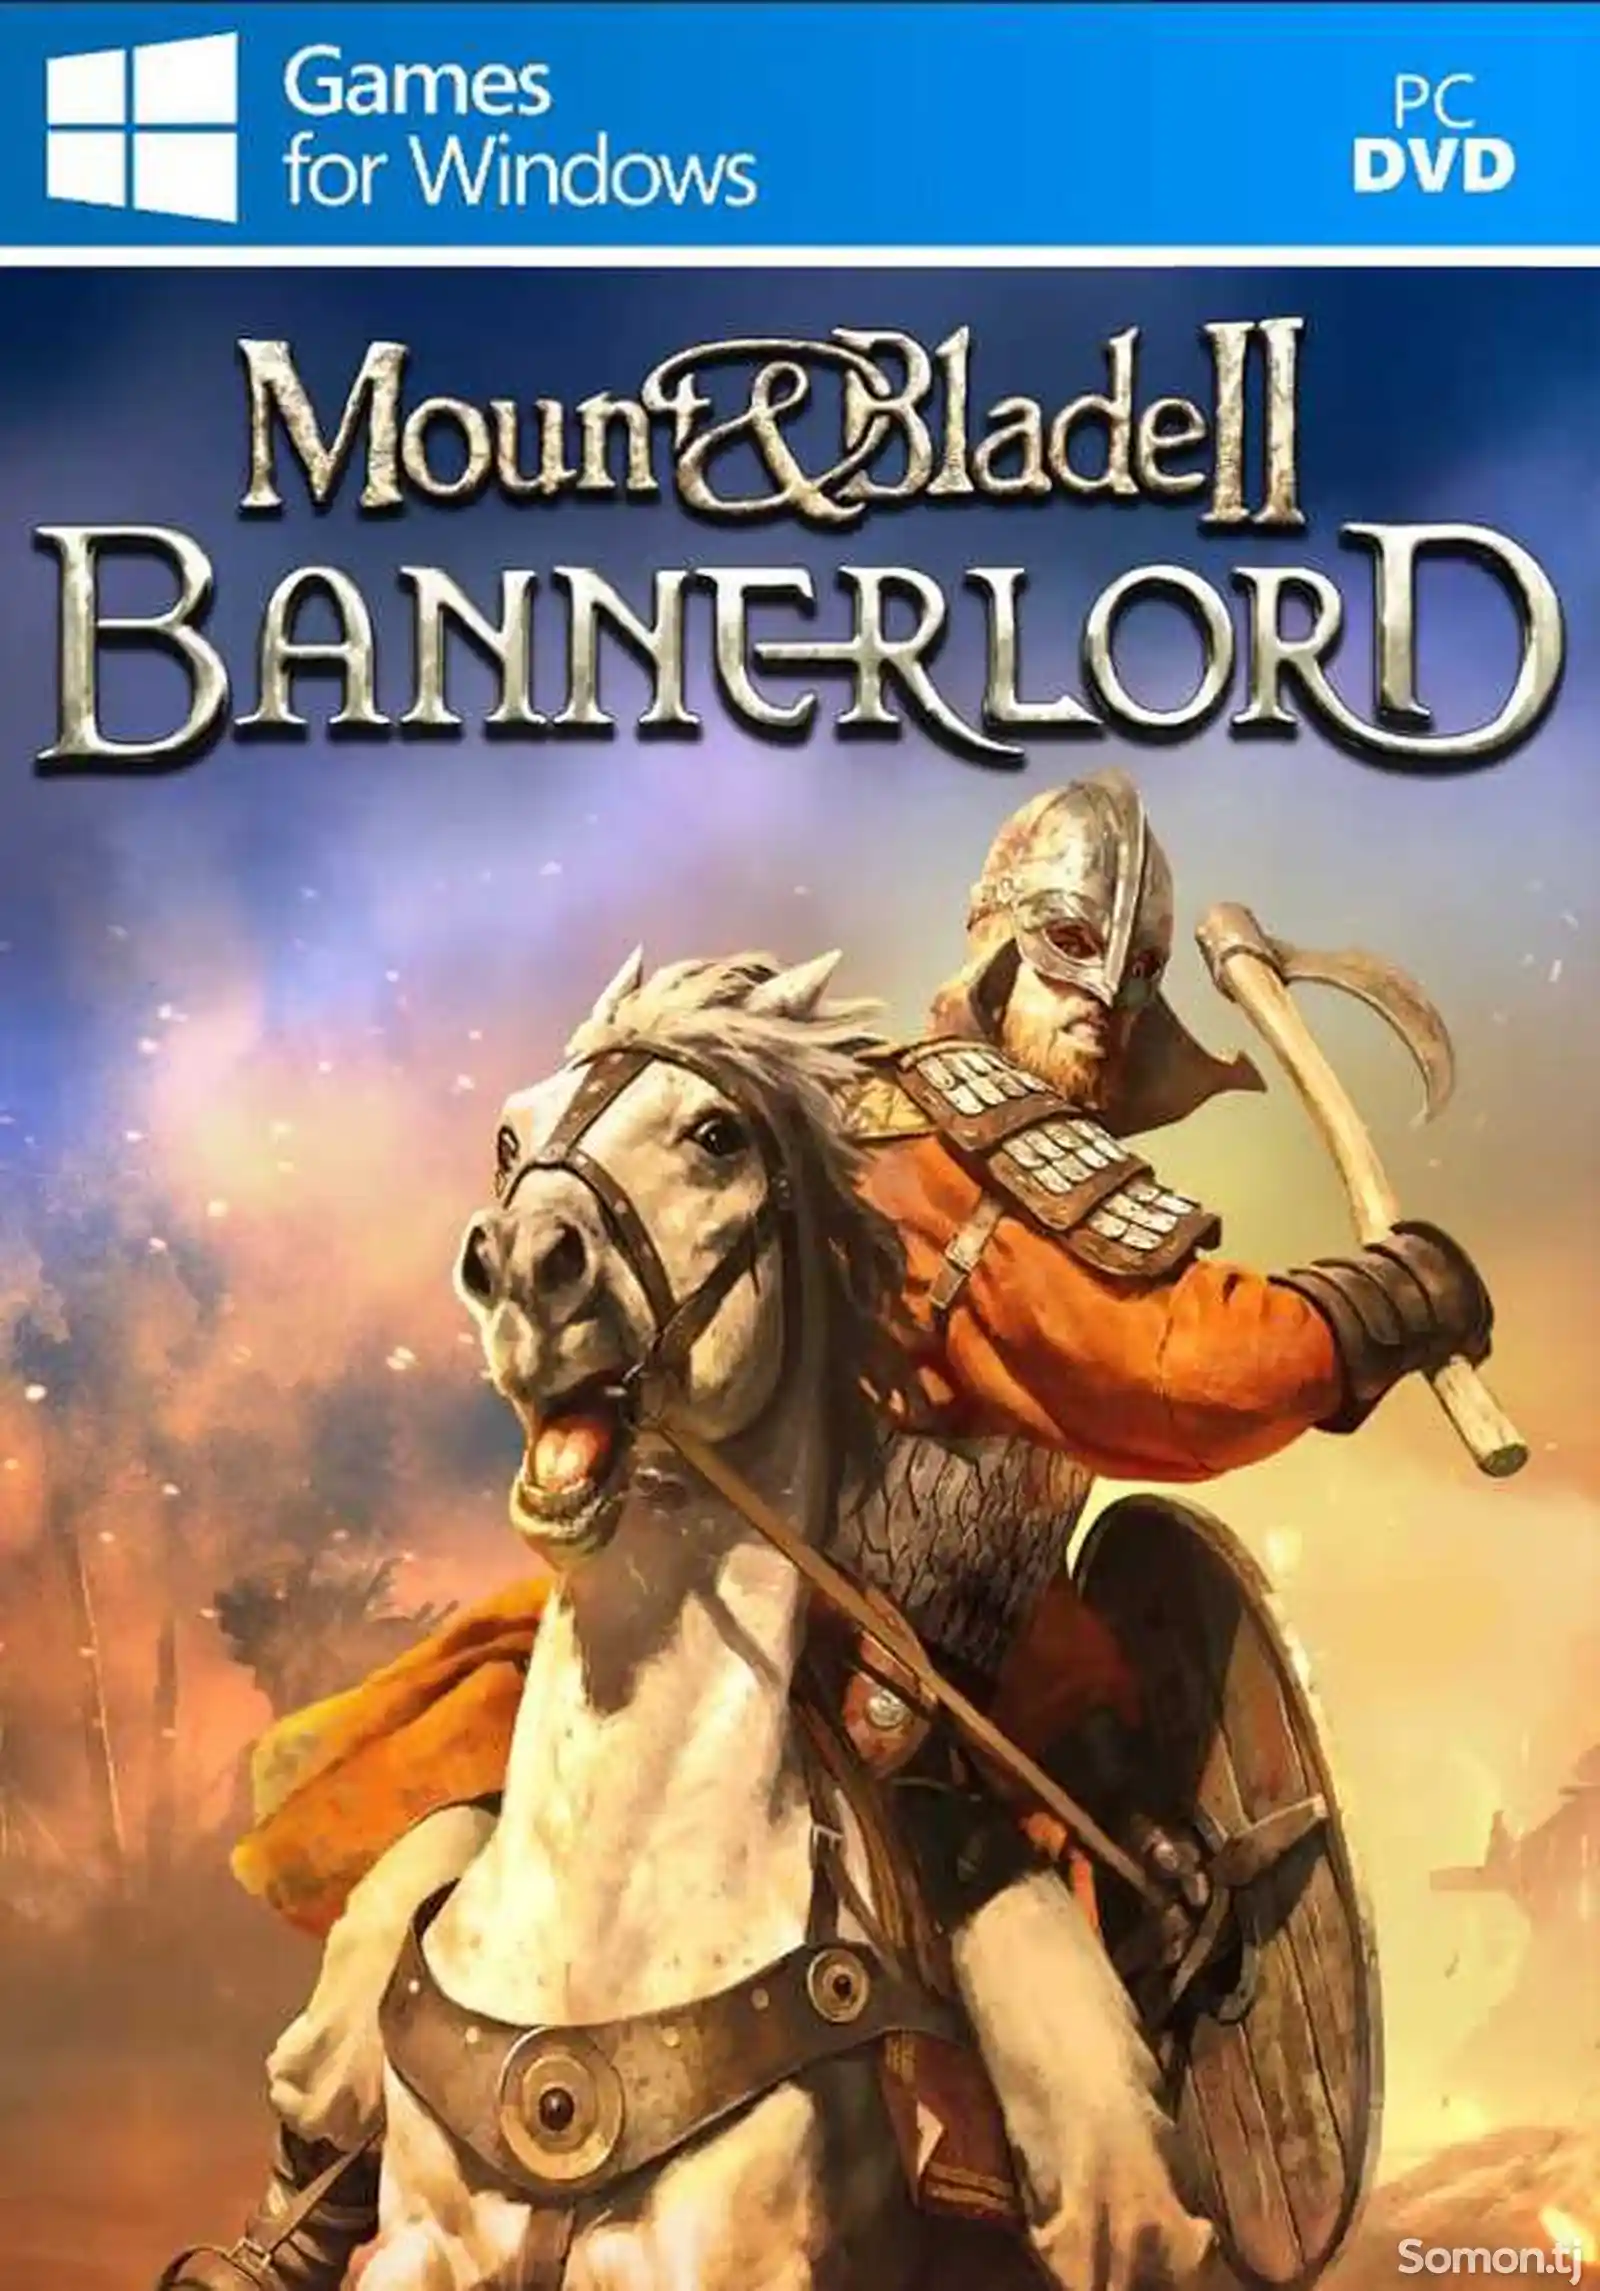 Игра Mount & blade 2 bannerlord для компьютера-пк-pc-1